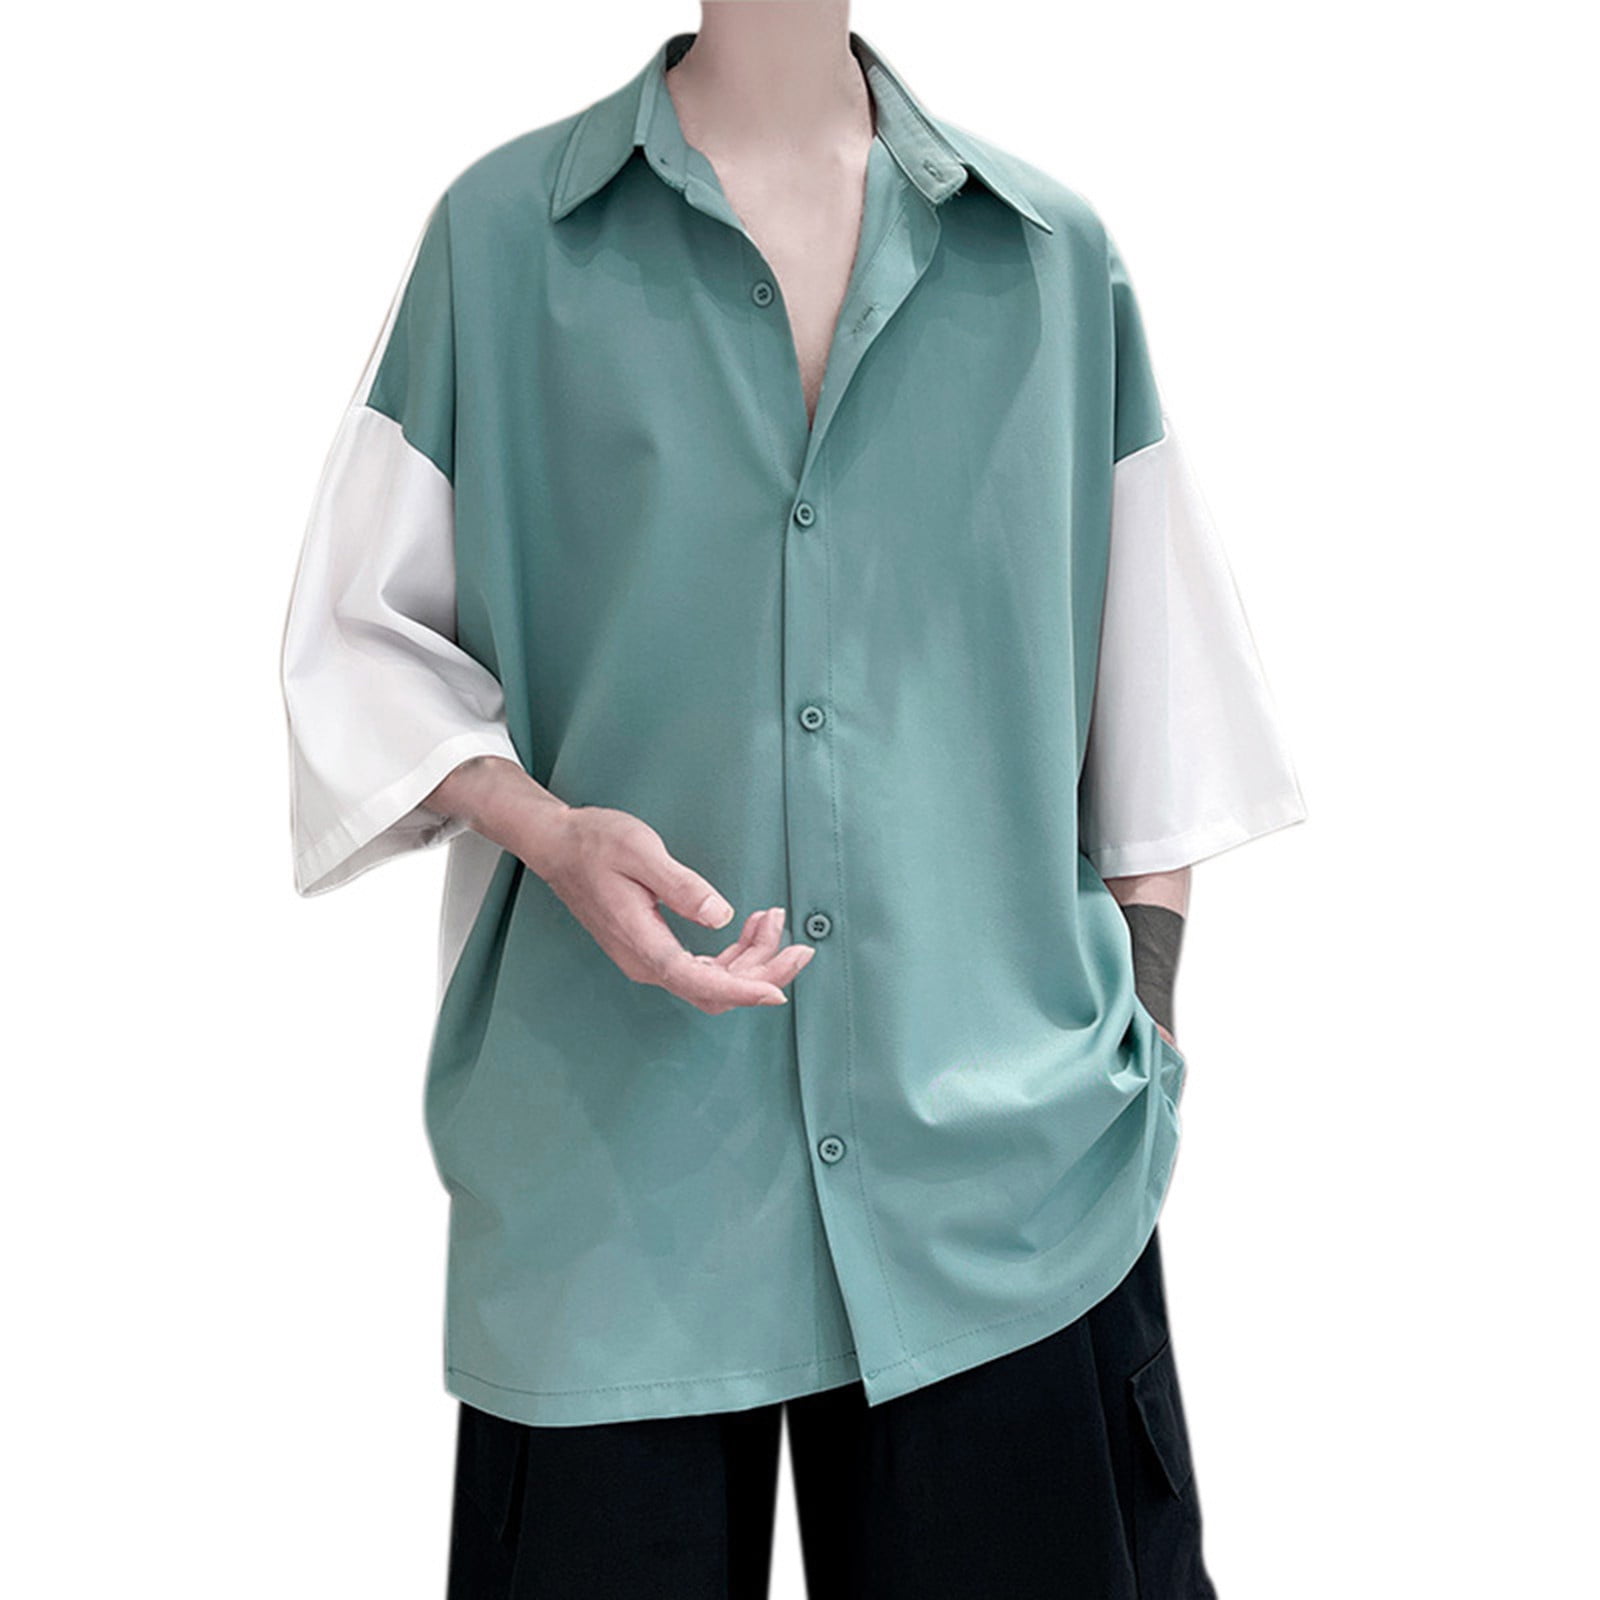 adviicd Shirts for Men Short Sleeve Shirts Casual Button Down Shirts ...